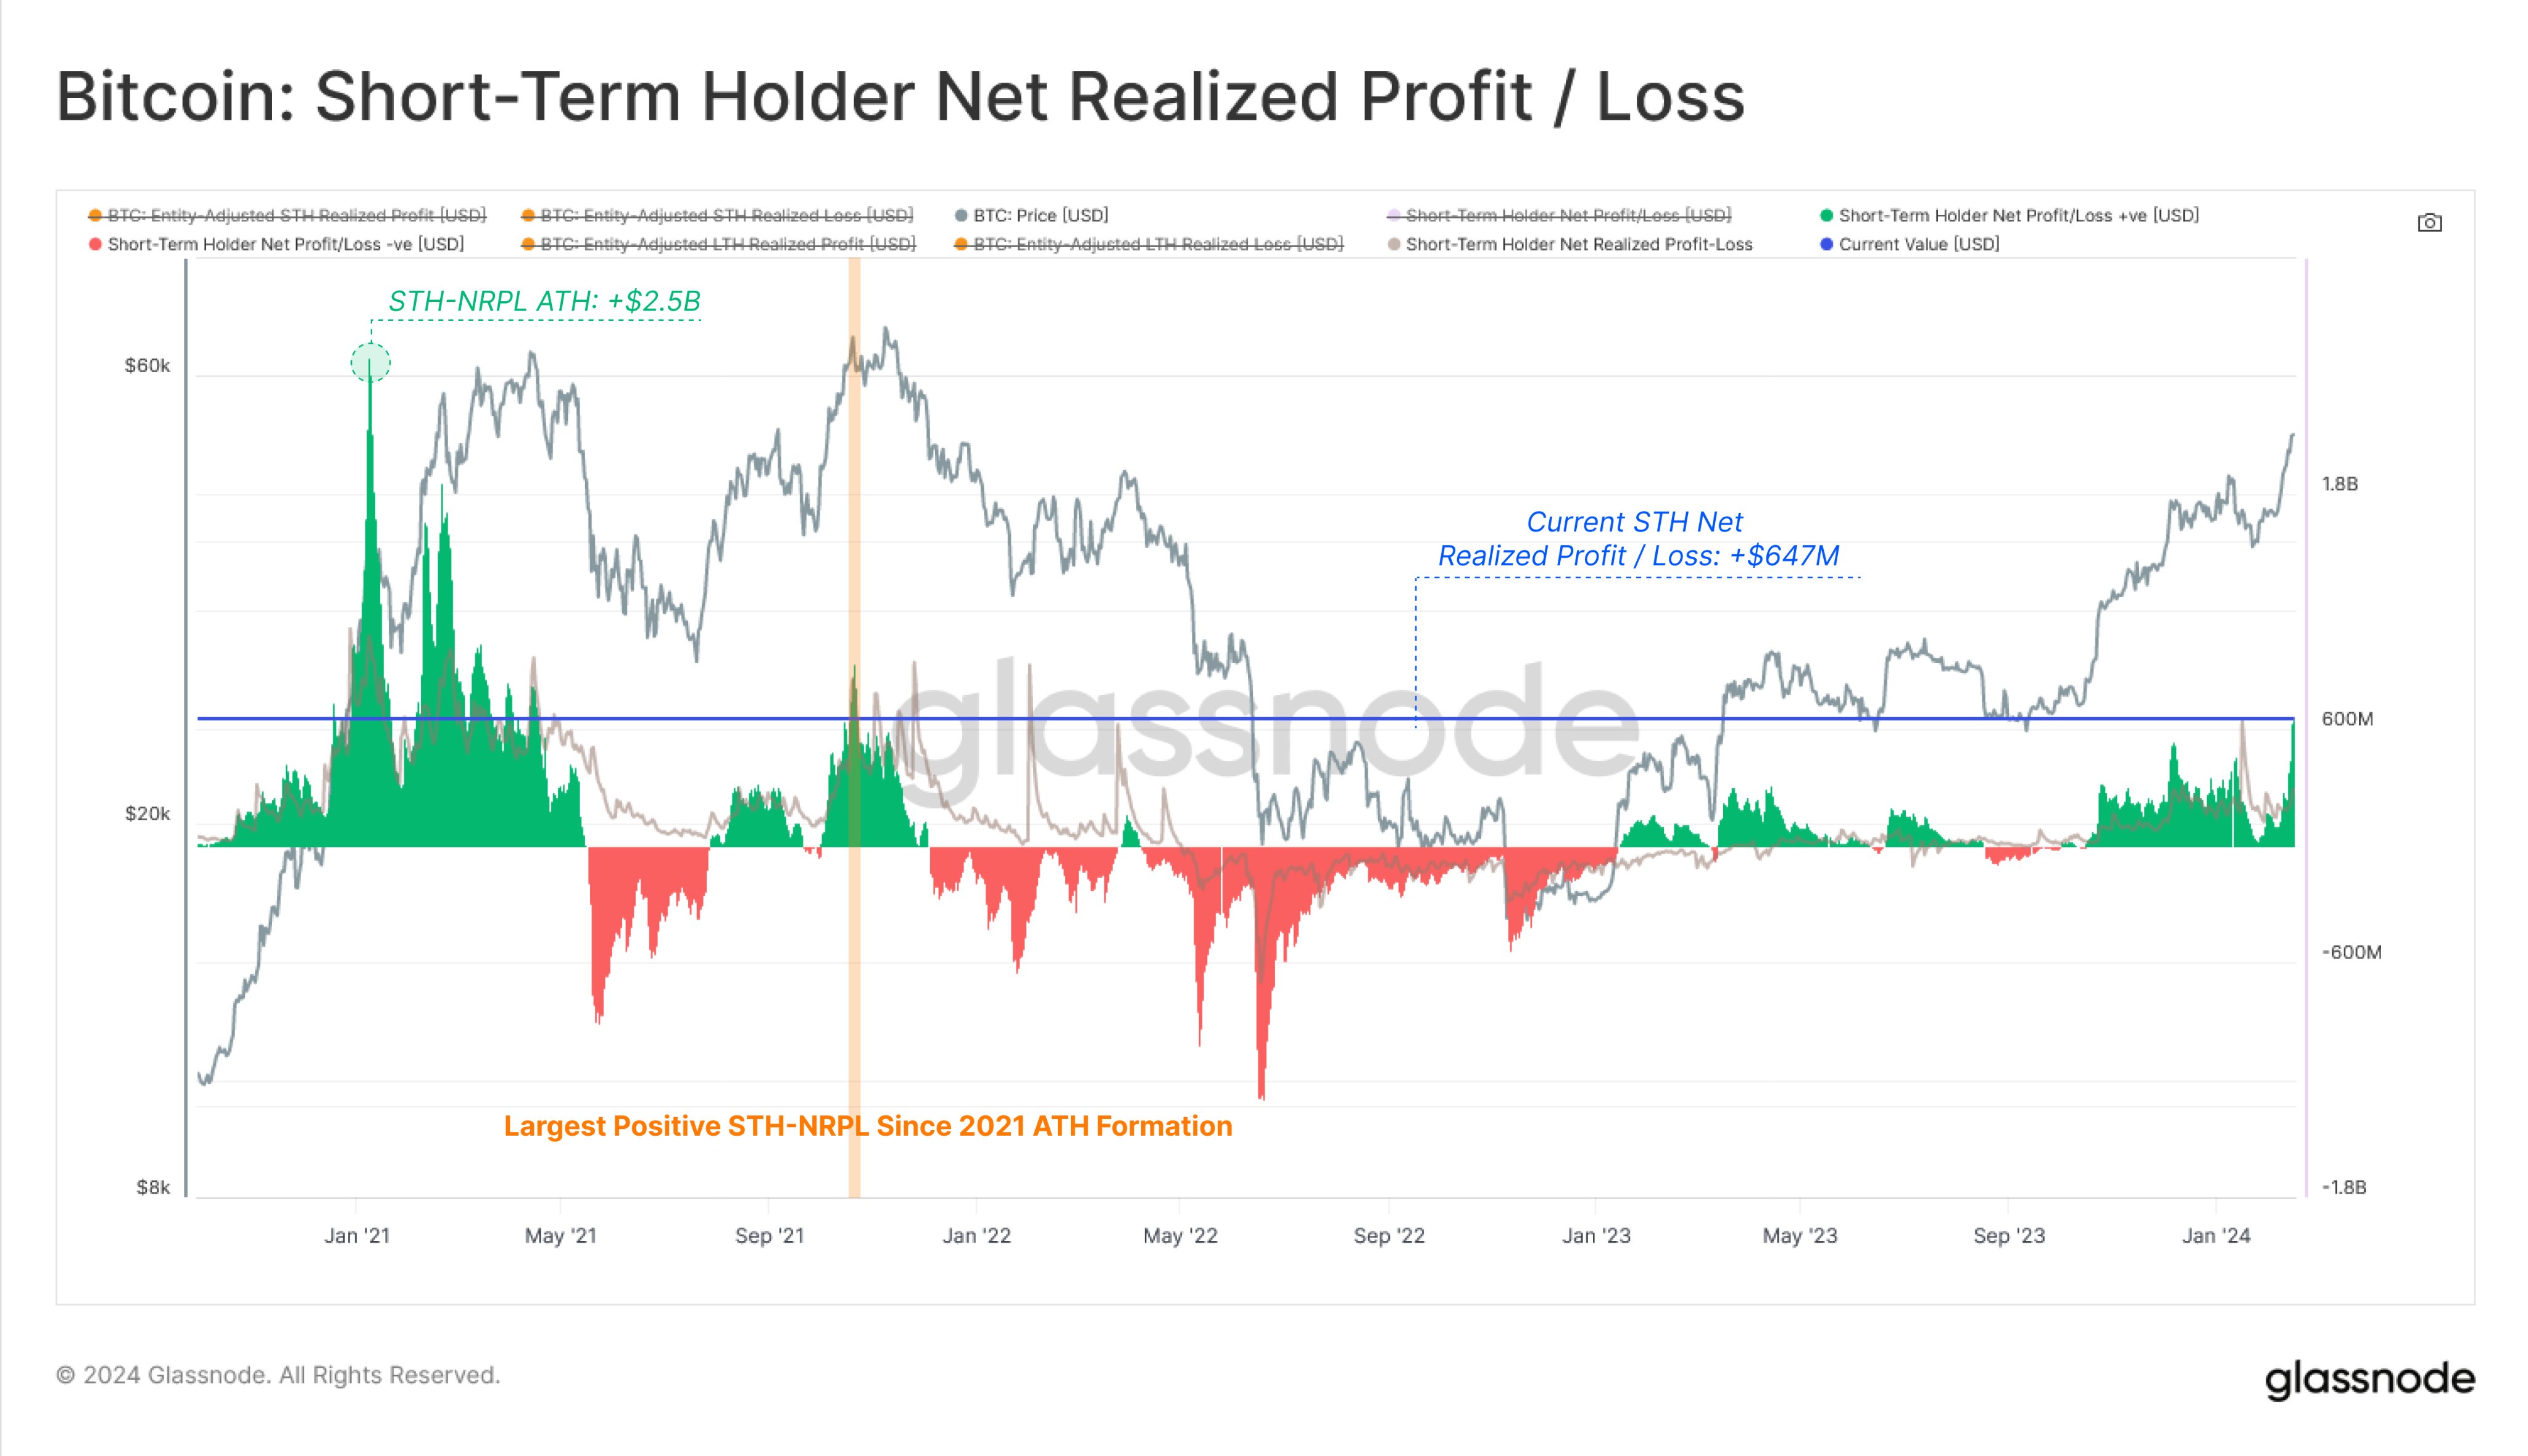 Bitcoin STH Net Realized Profit/Loss